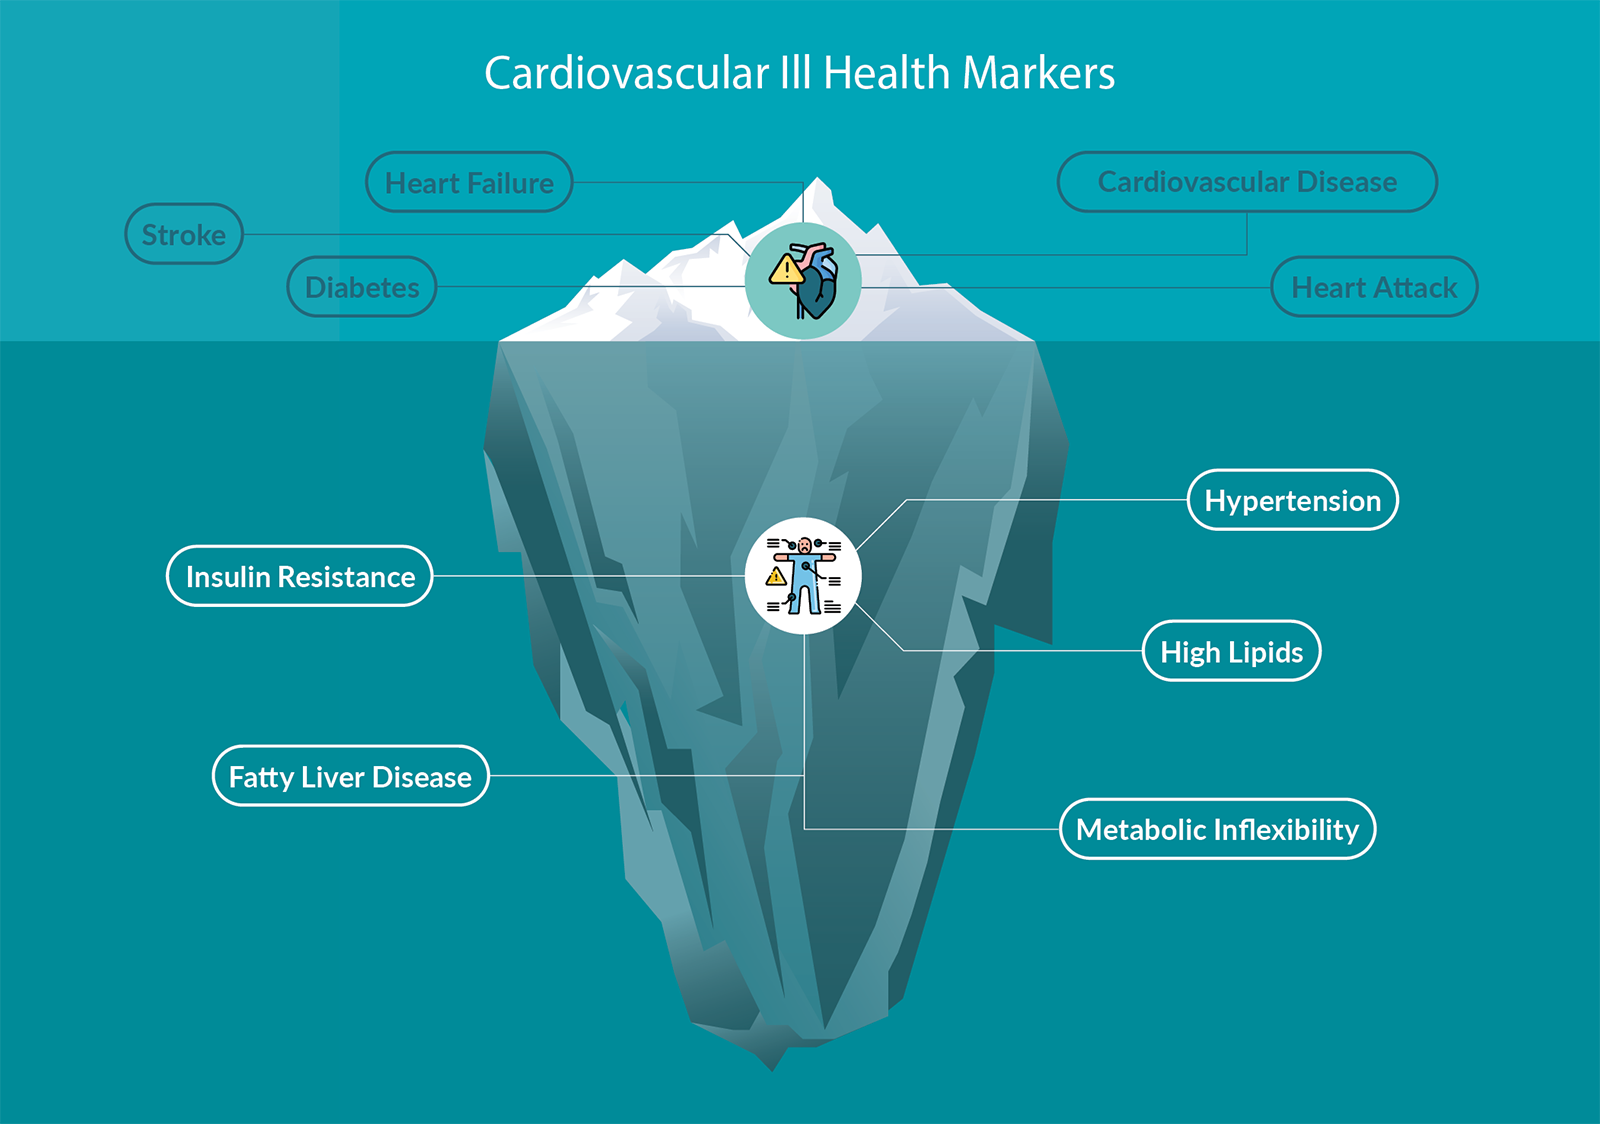 Iceberg of Cardiovascular Ill Health Markers